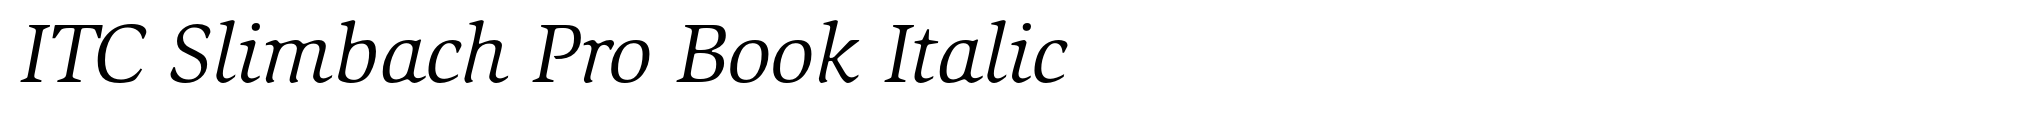 ITC Slimbach Pro Book Italic image